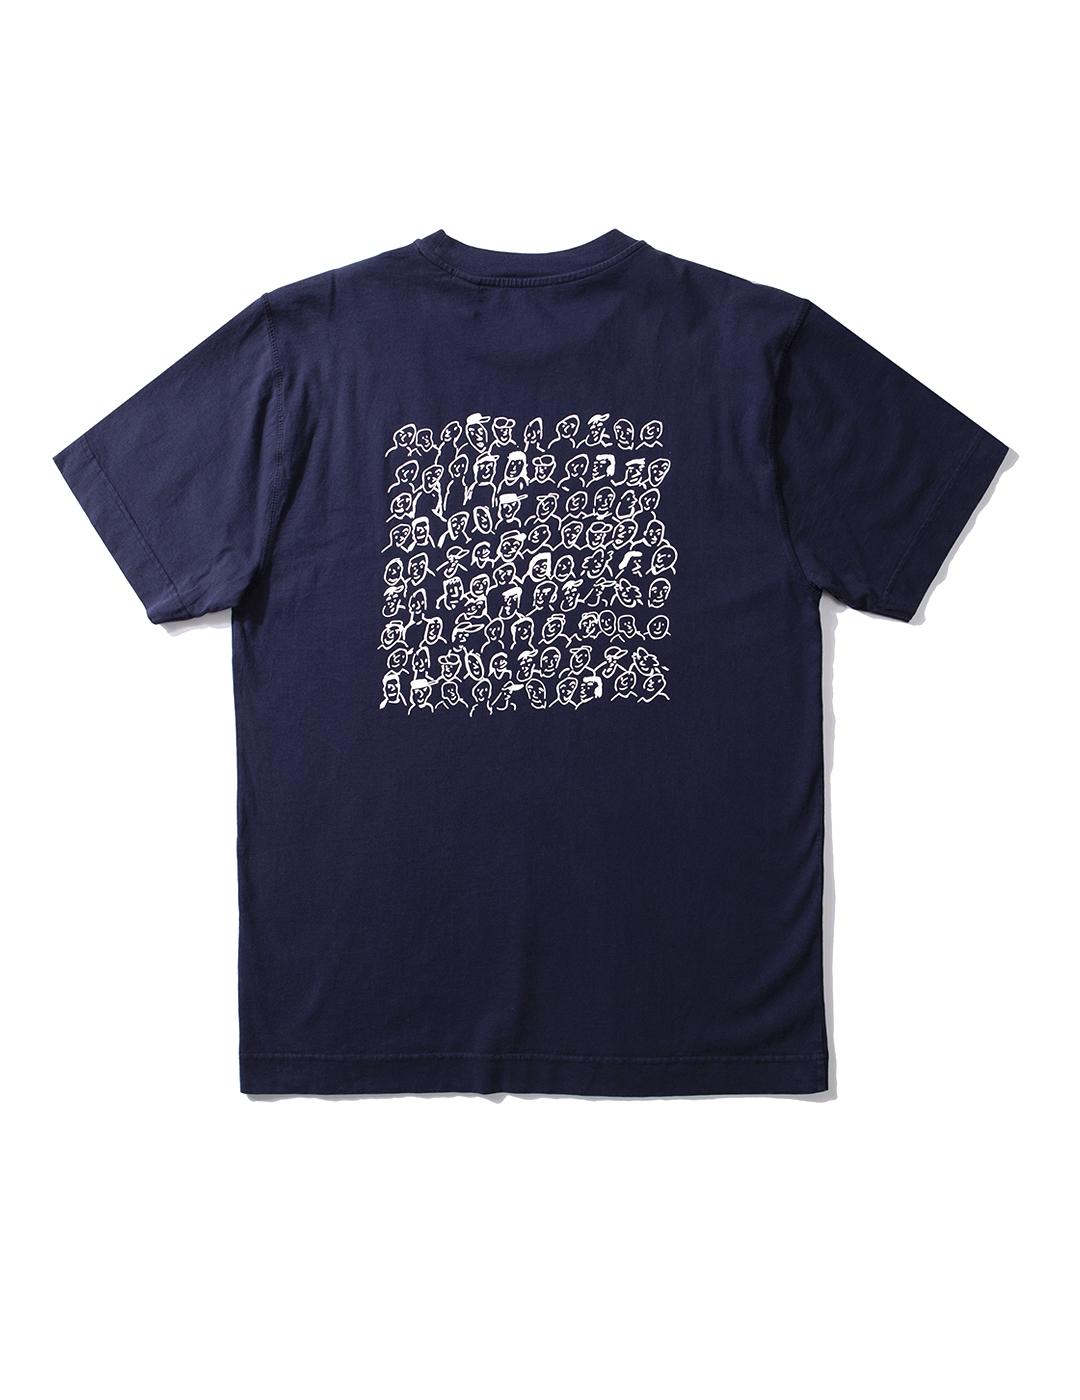 Camiseta Edmmond People azul marino de hombre